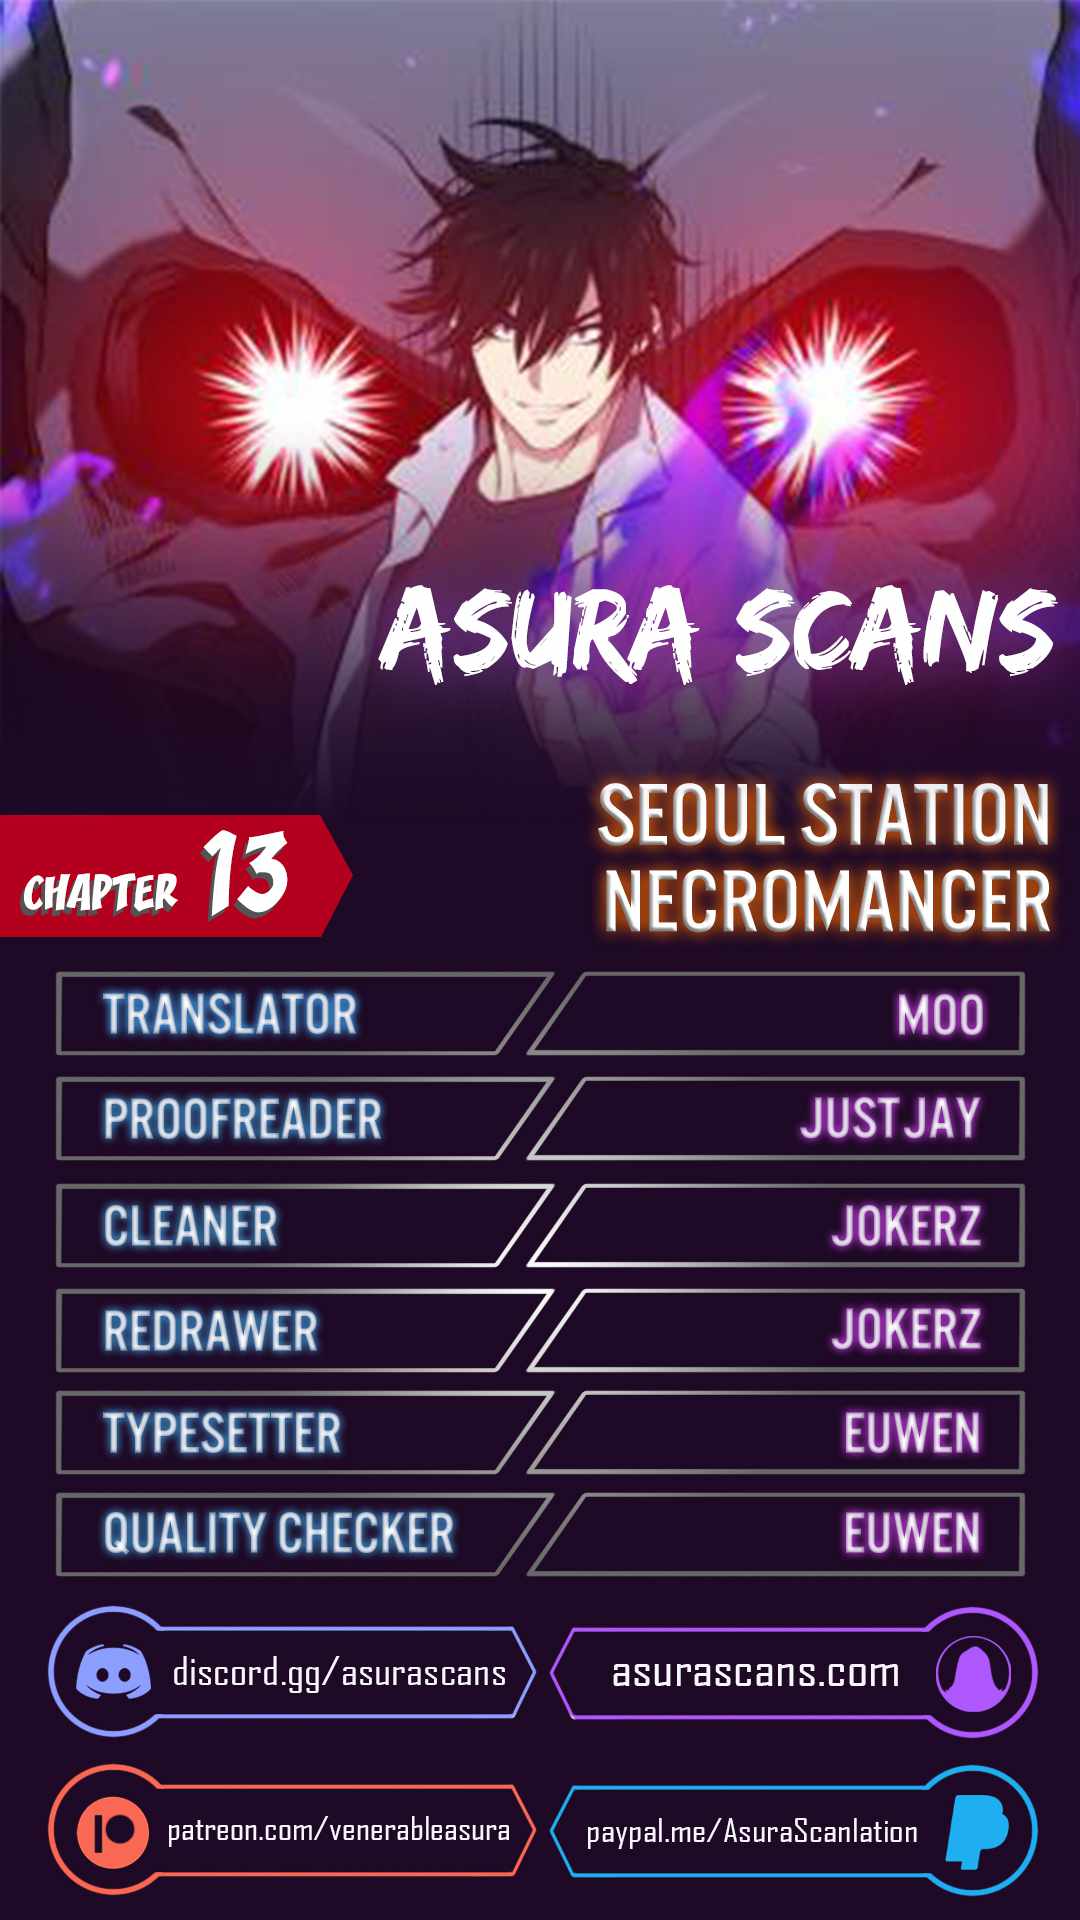 Seoul Station’s Necromancer chapter 13